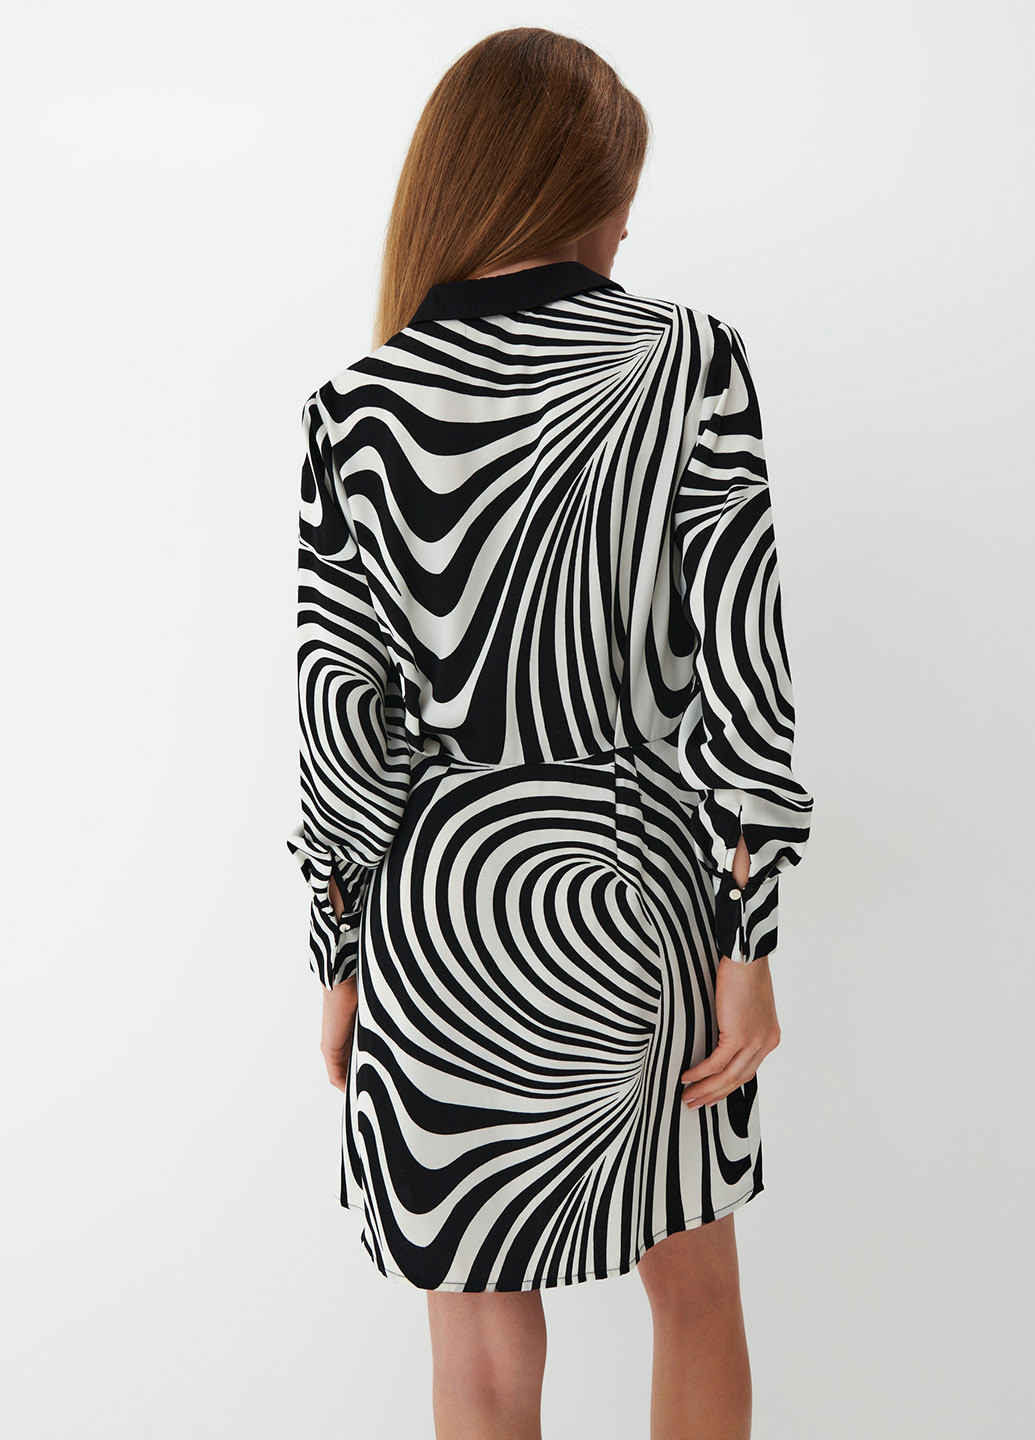 Черно-белое кэжуал платье рубашка Mohito зебра